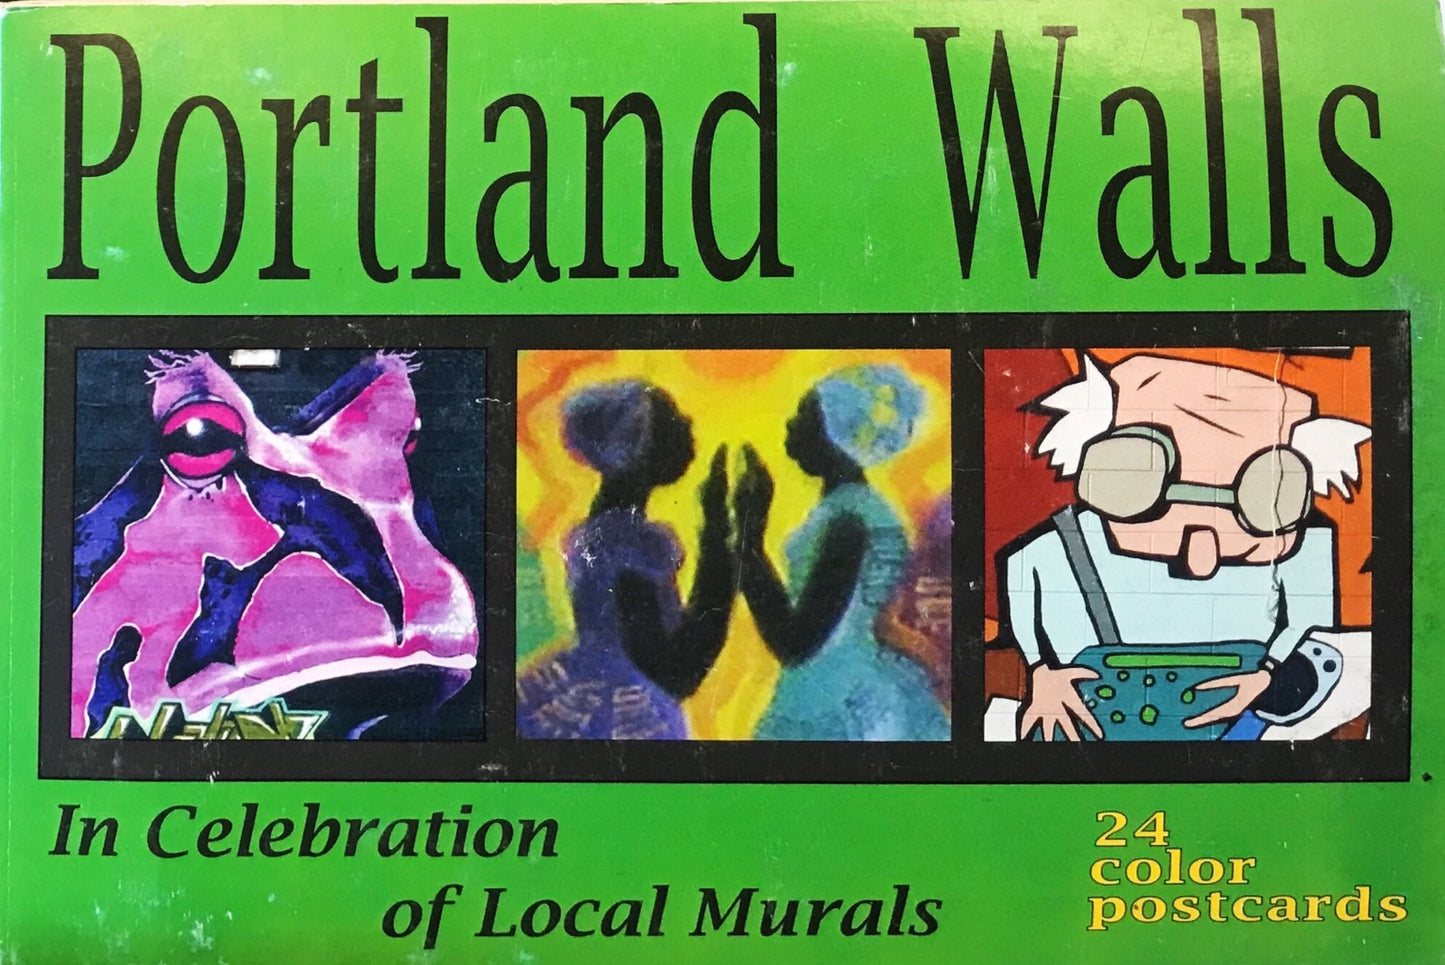 Portland Walls: In Celebration of Local Murals, 24 Color Postcards